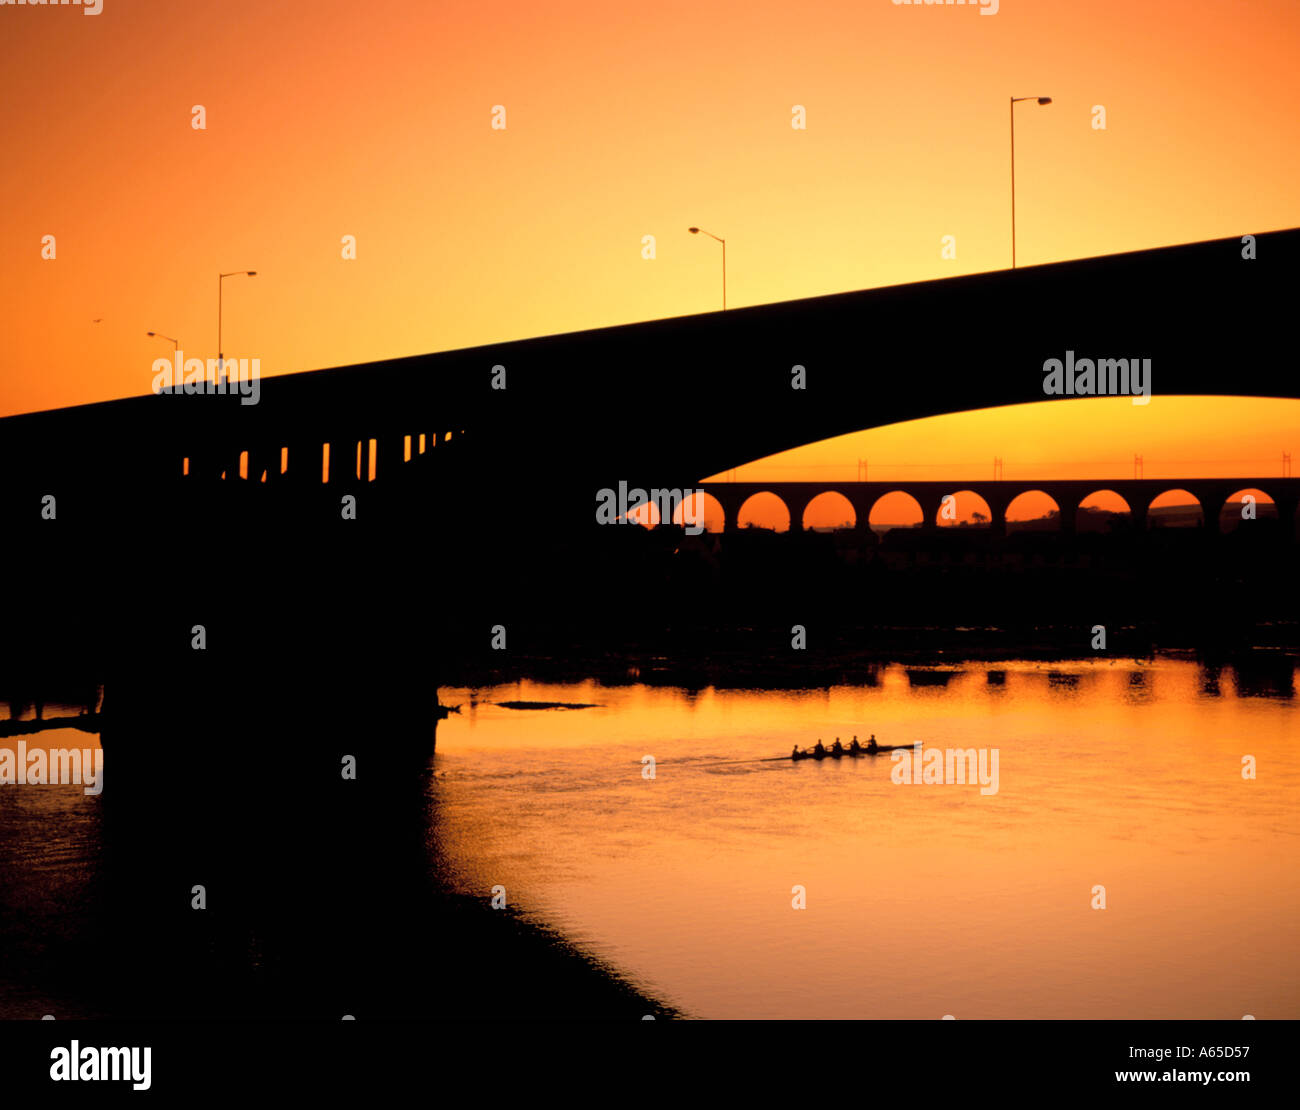 Royal Tweed und Royal Border Brücken über dem Fluss Tweed bei Sonnenuntergang, Berwick-upon-Tweed, Northumberland, England, UK. Stockfoto